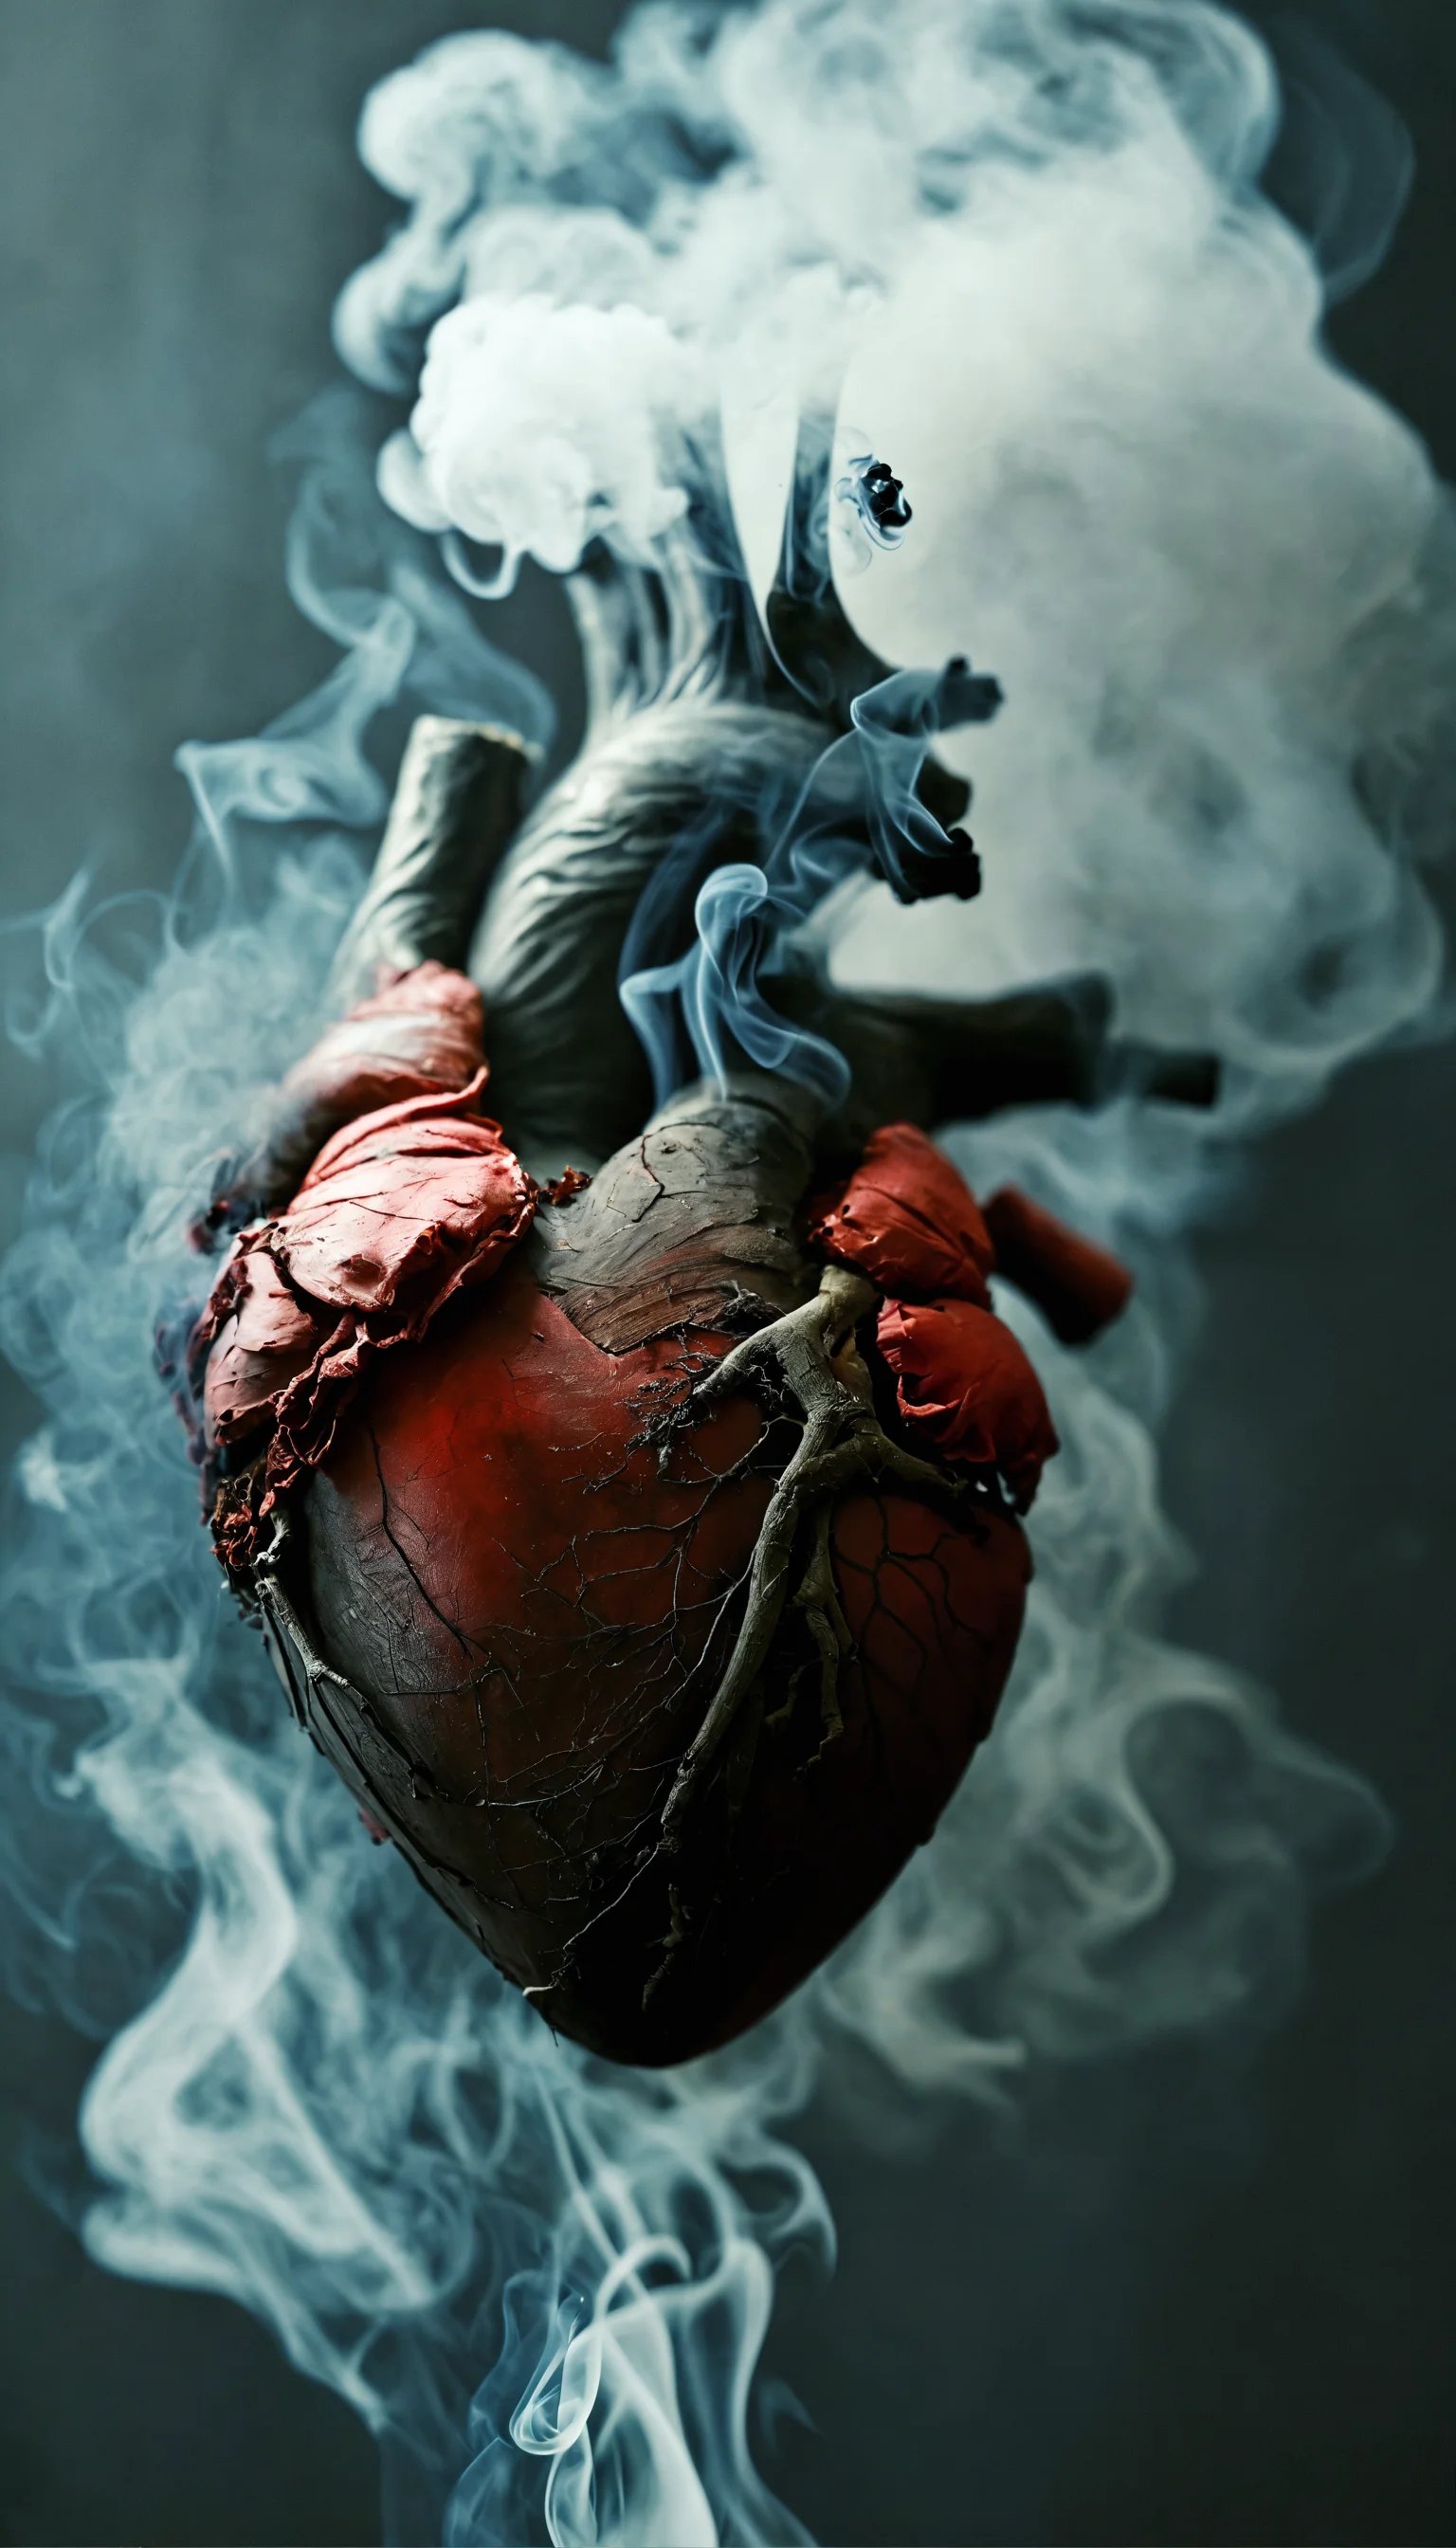 Heart Made Of Smoke  Wallpaper 4K